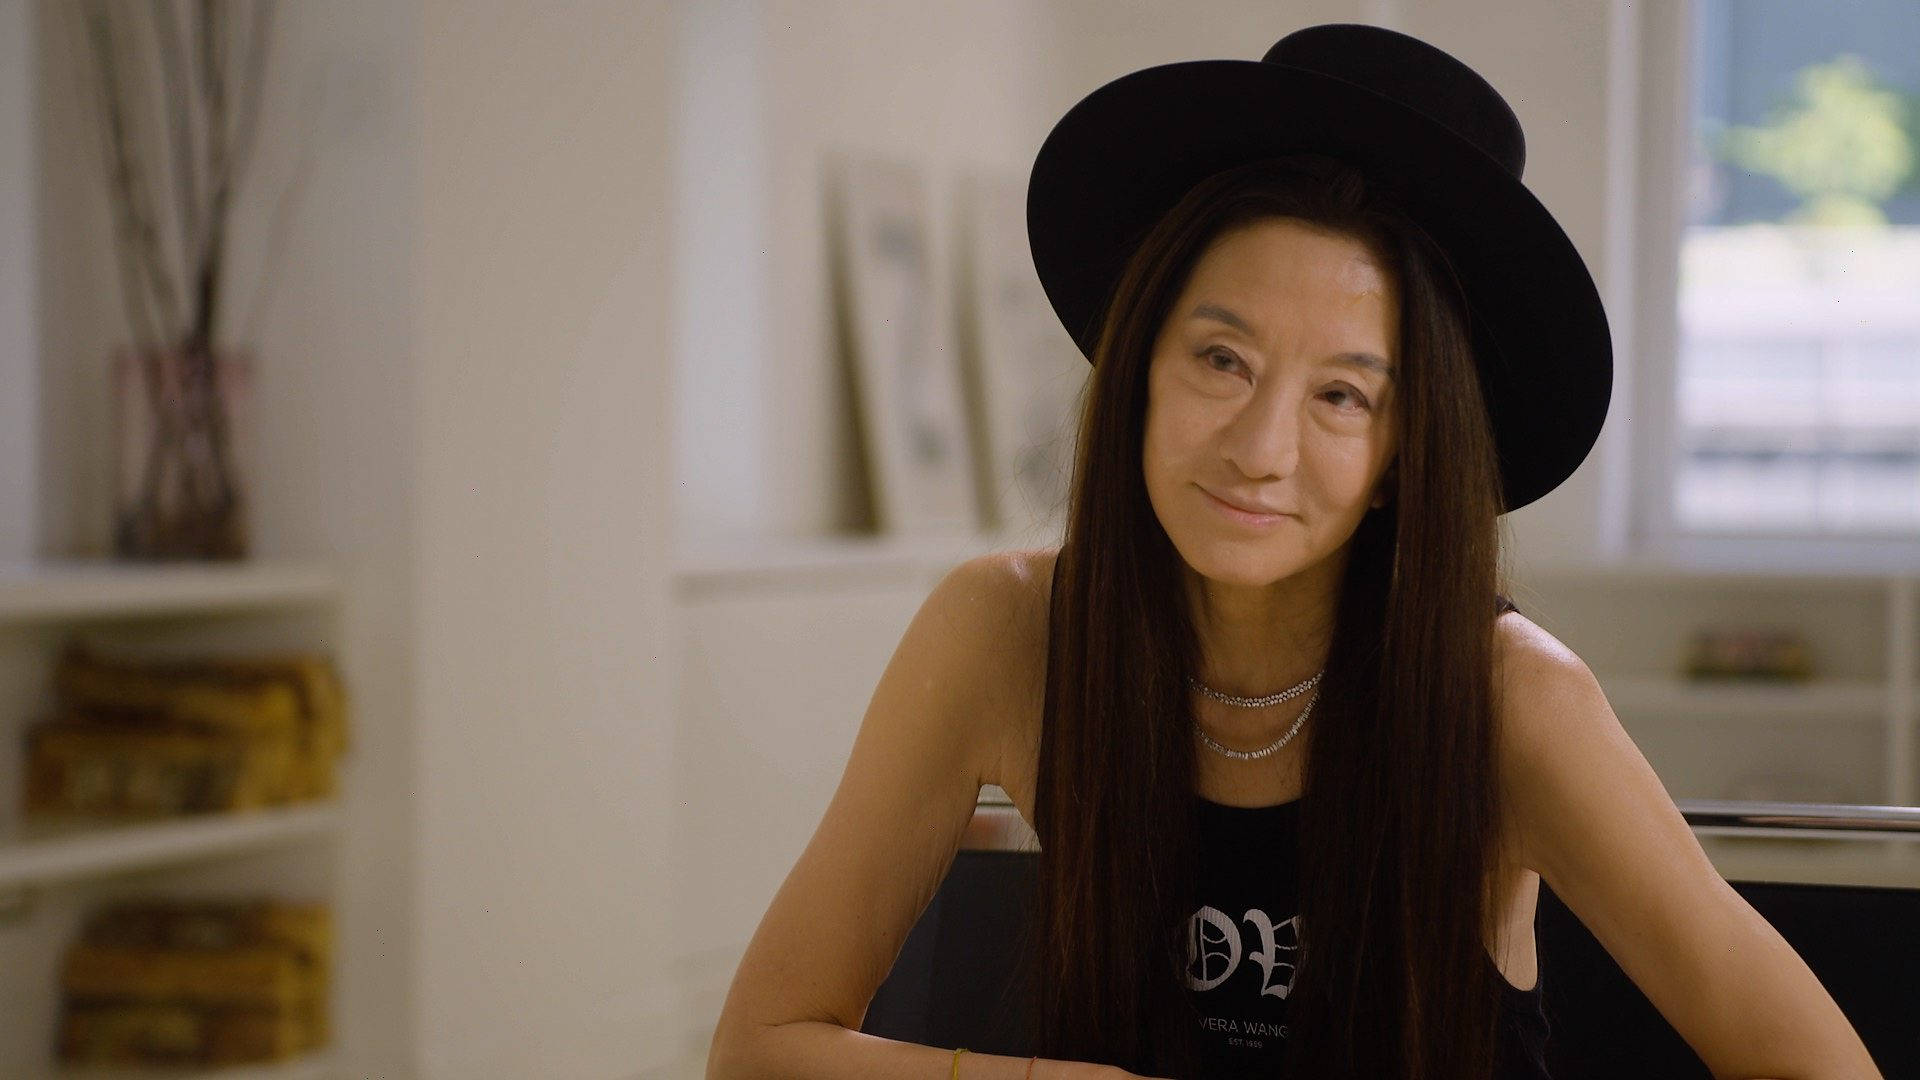 Vera Wang Wearing Black Hat Wallpaper